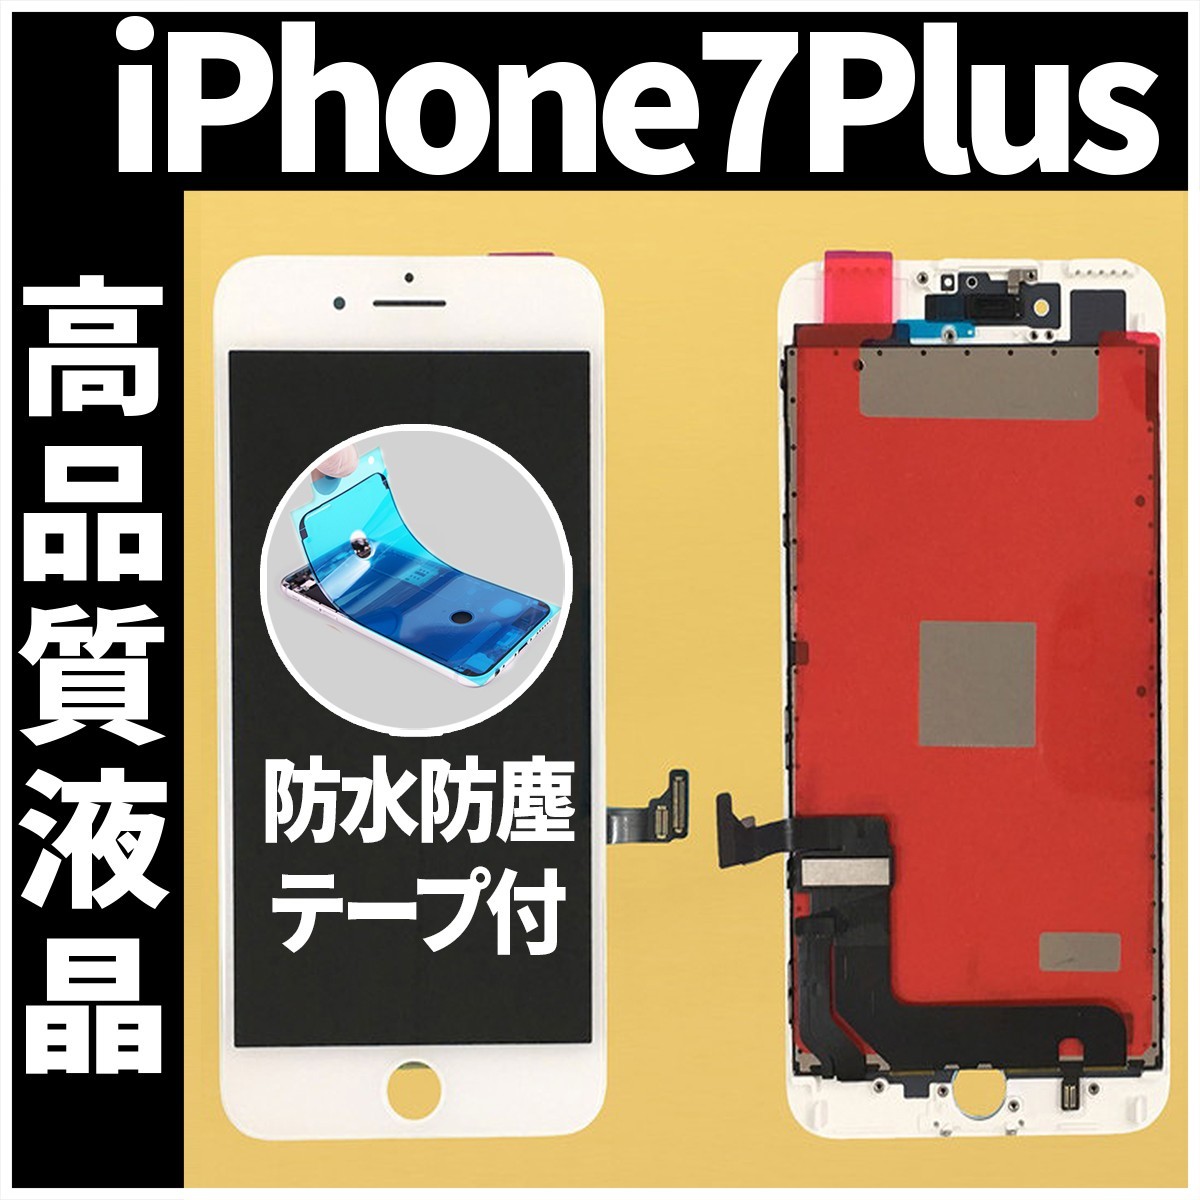 iPhone7plus 高品質液晶 フロントパネル 白 高品質AAA 互換品 LCD 業者 画面割れ 液晶 iphone 修理 ガラス割れ 交換 防水テープ付 工具無_画像1